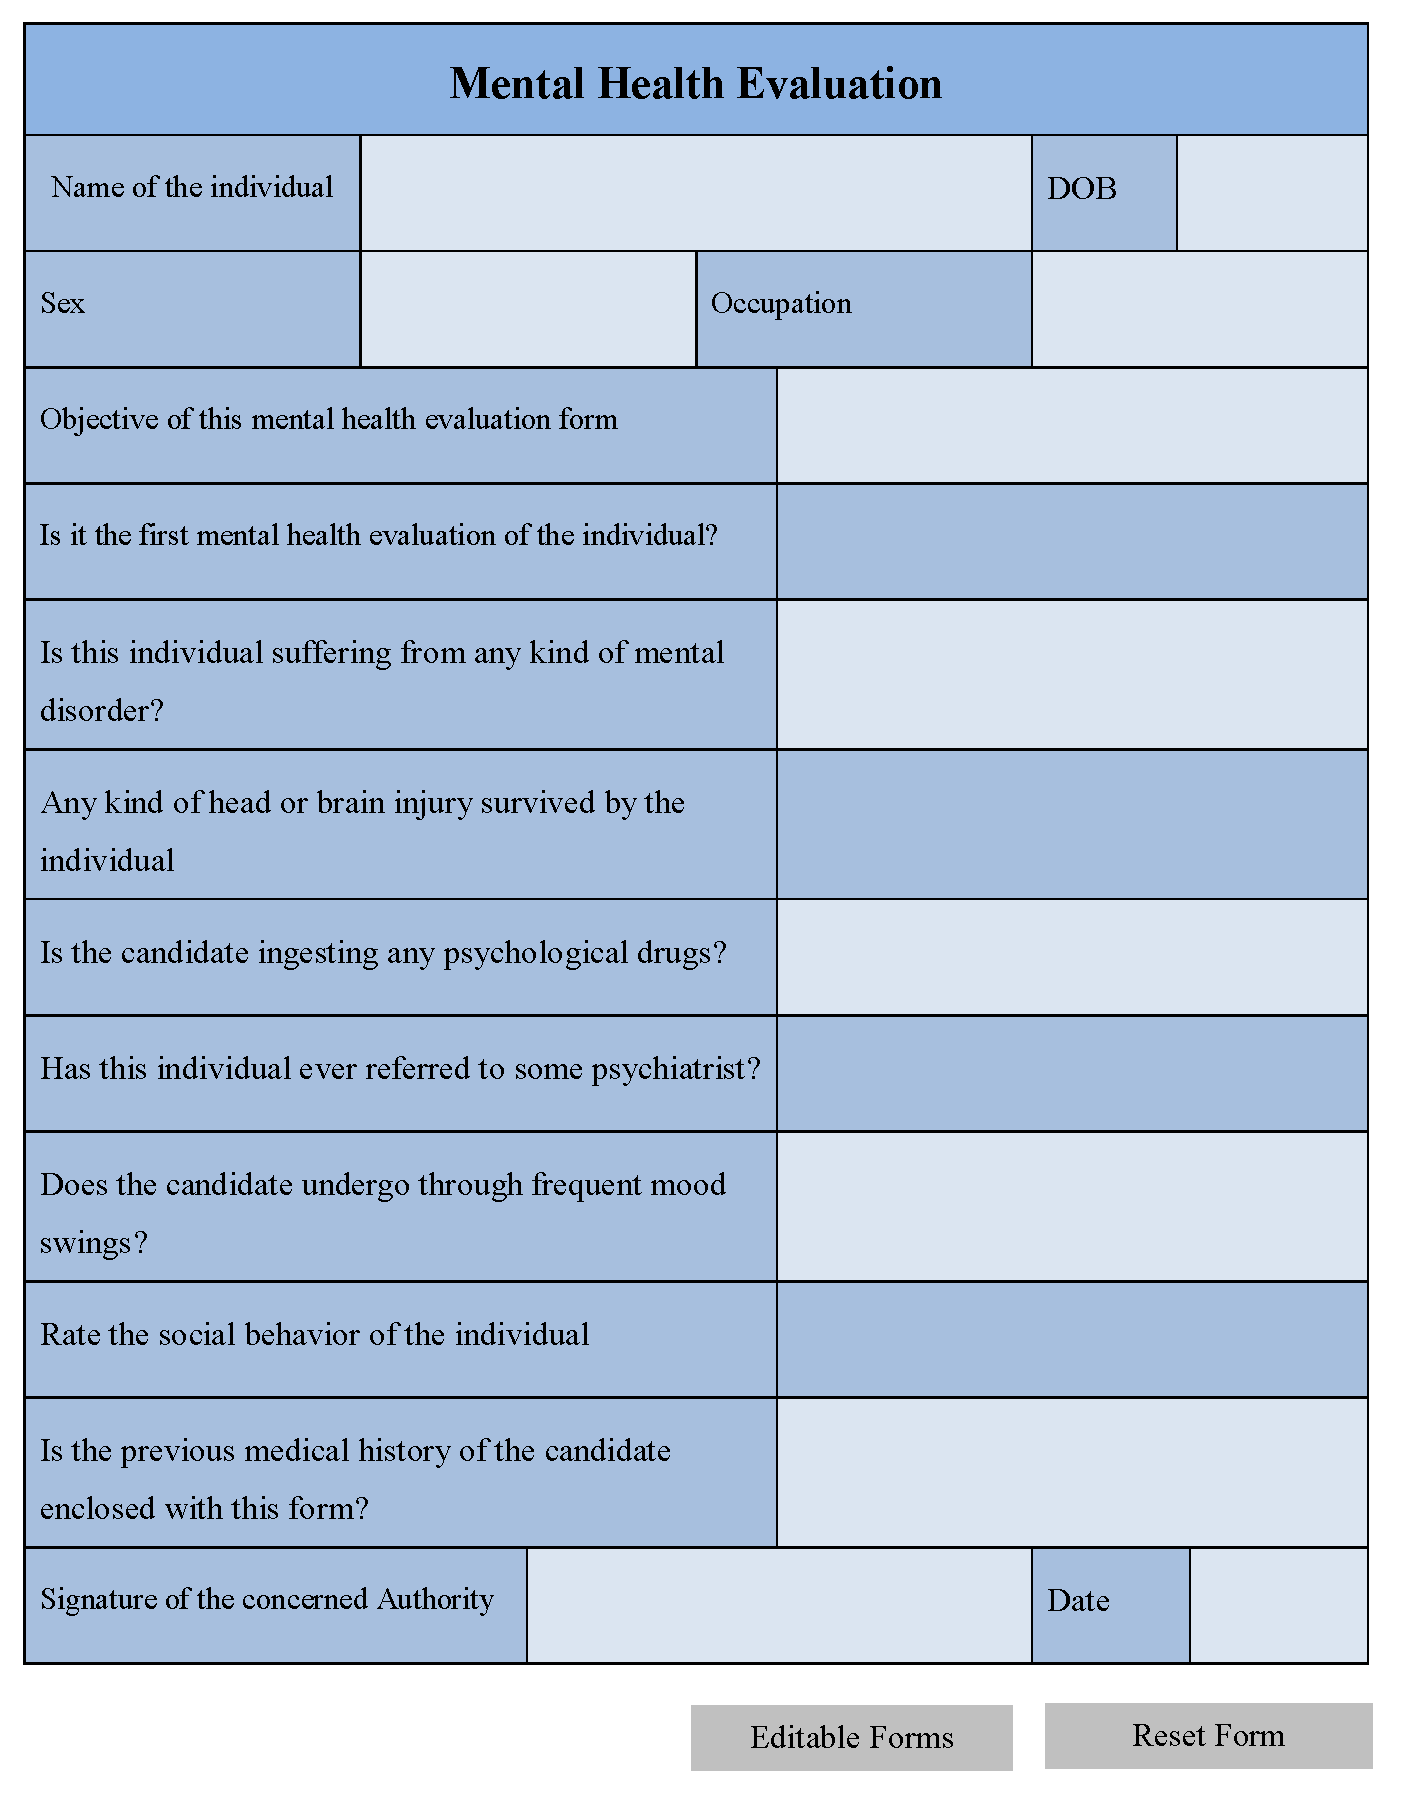 Printable Mental Health Intake Assessment Forms